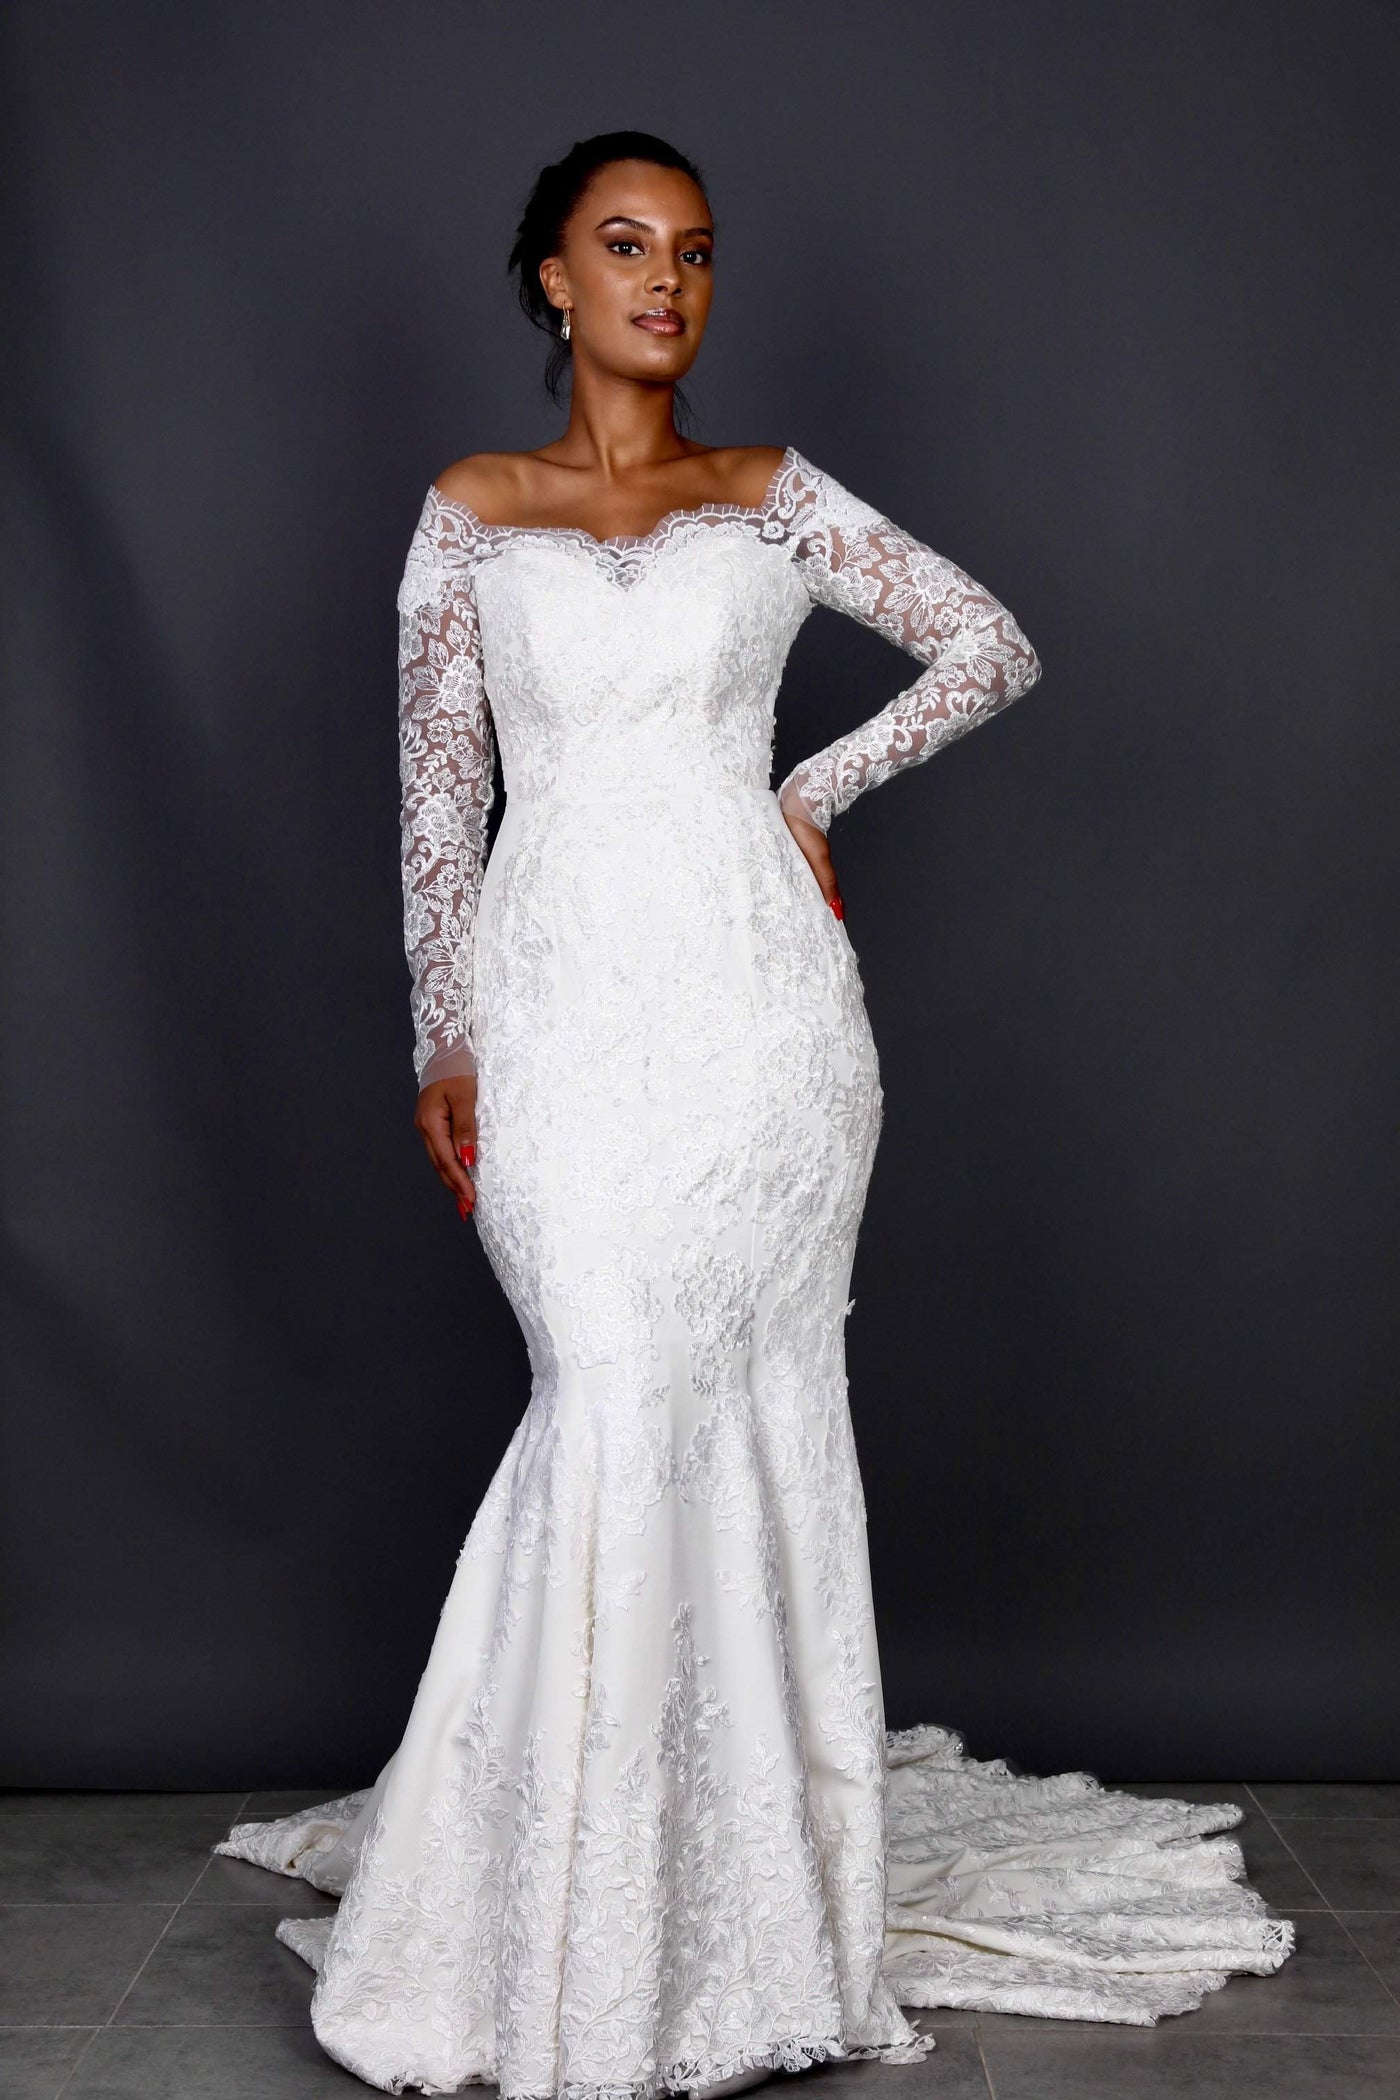 Wedding Dress with Lace Mermaid-danddclothing-Classic Elegant Gowns,Mermaid,Royal Wedding Dresses,White